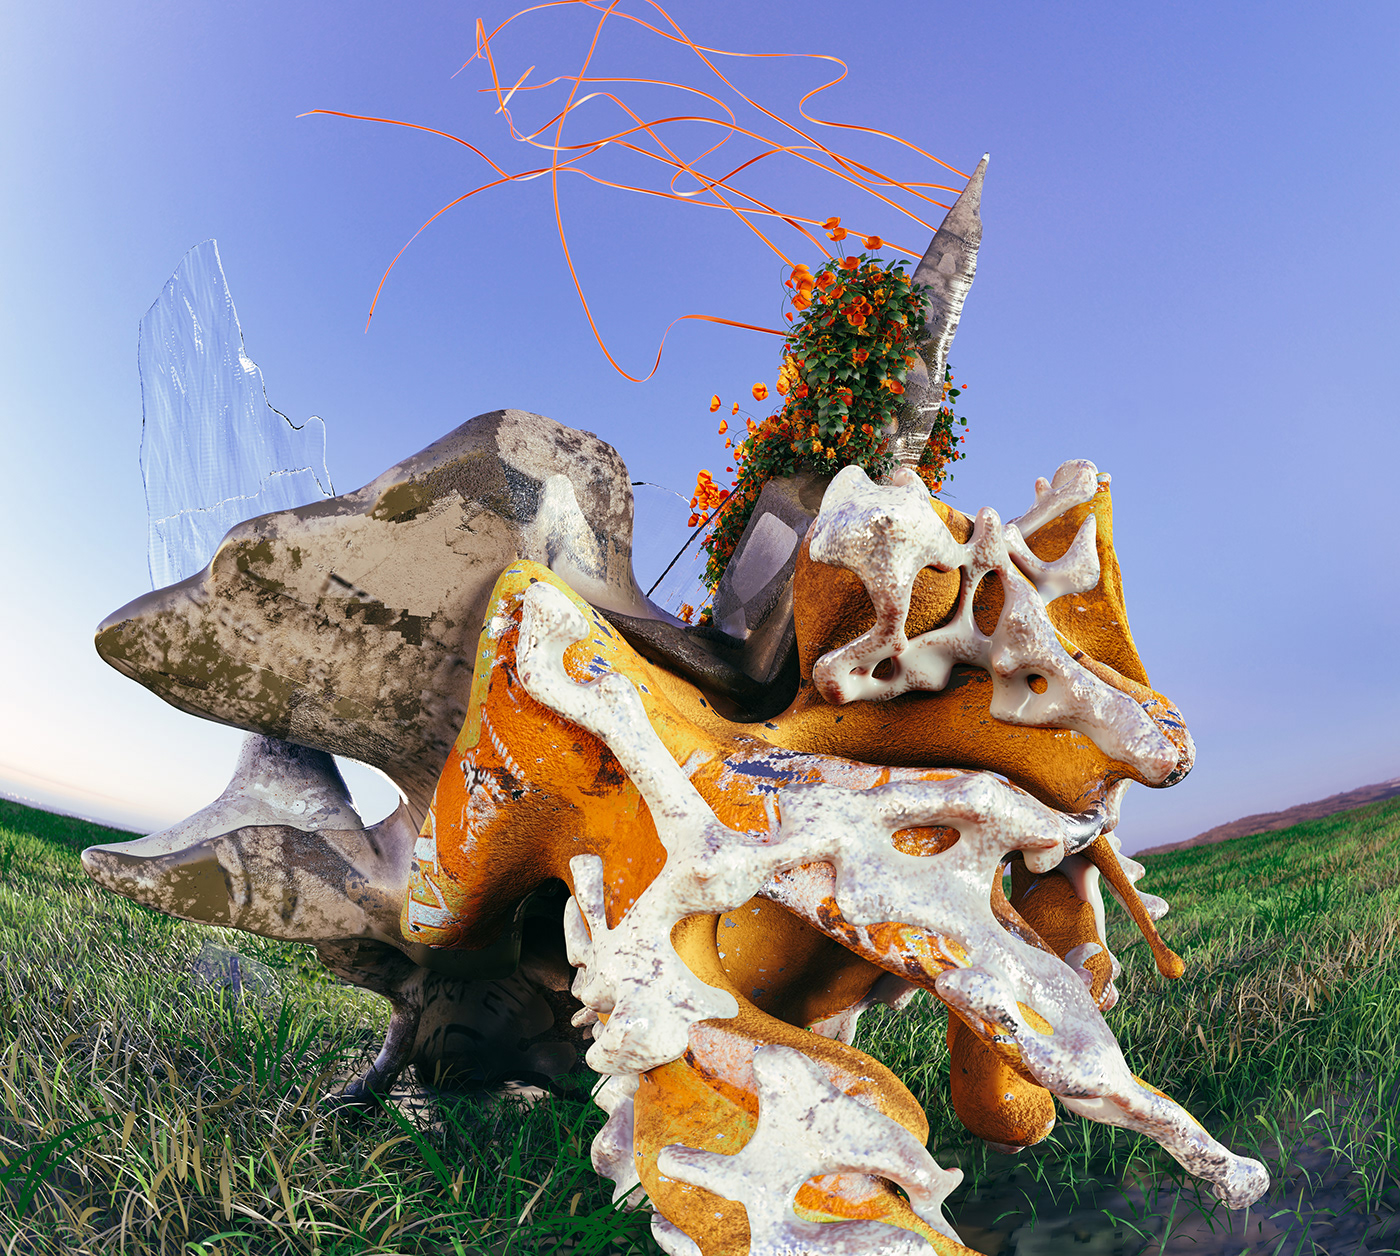 contemporaryart digitalart Nature CGI organic art abstract Sustainability environment